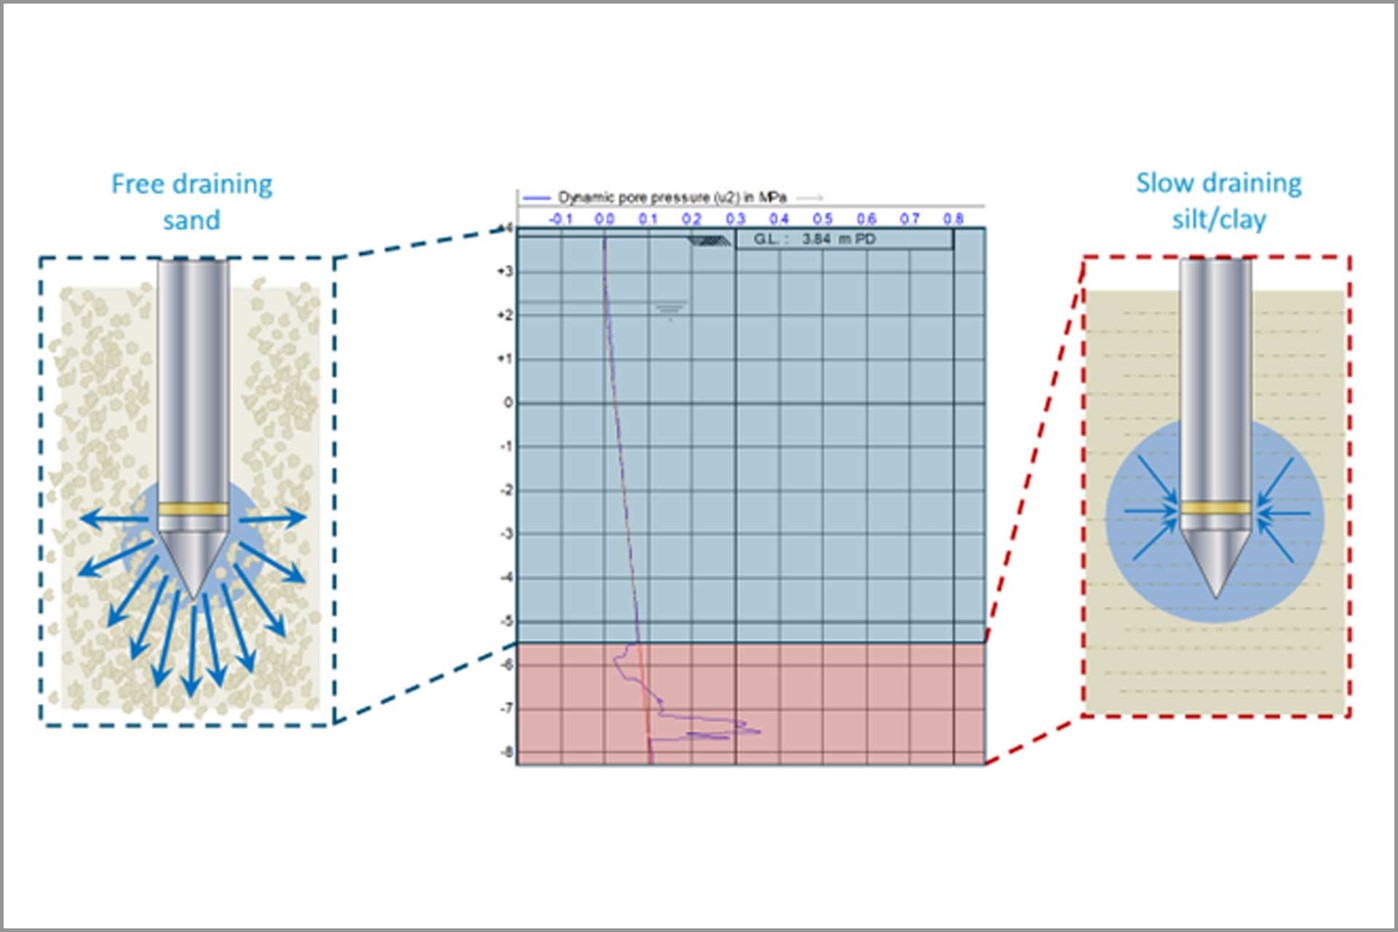 Figure 3: Pore pressure response during drained vs undrained penetration | Image source: Cone Consultants Ltd, UK